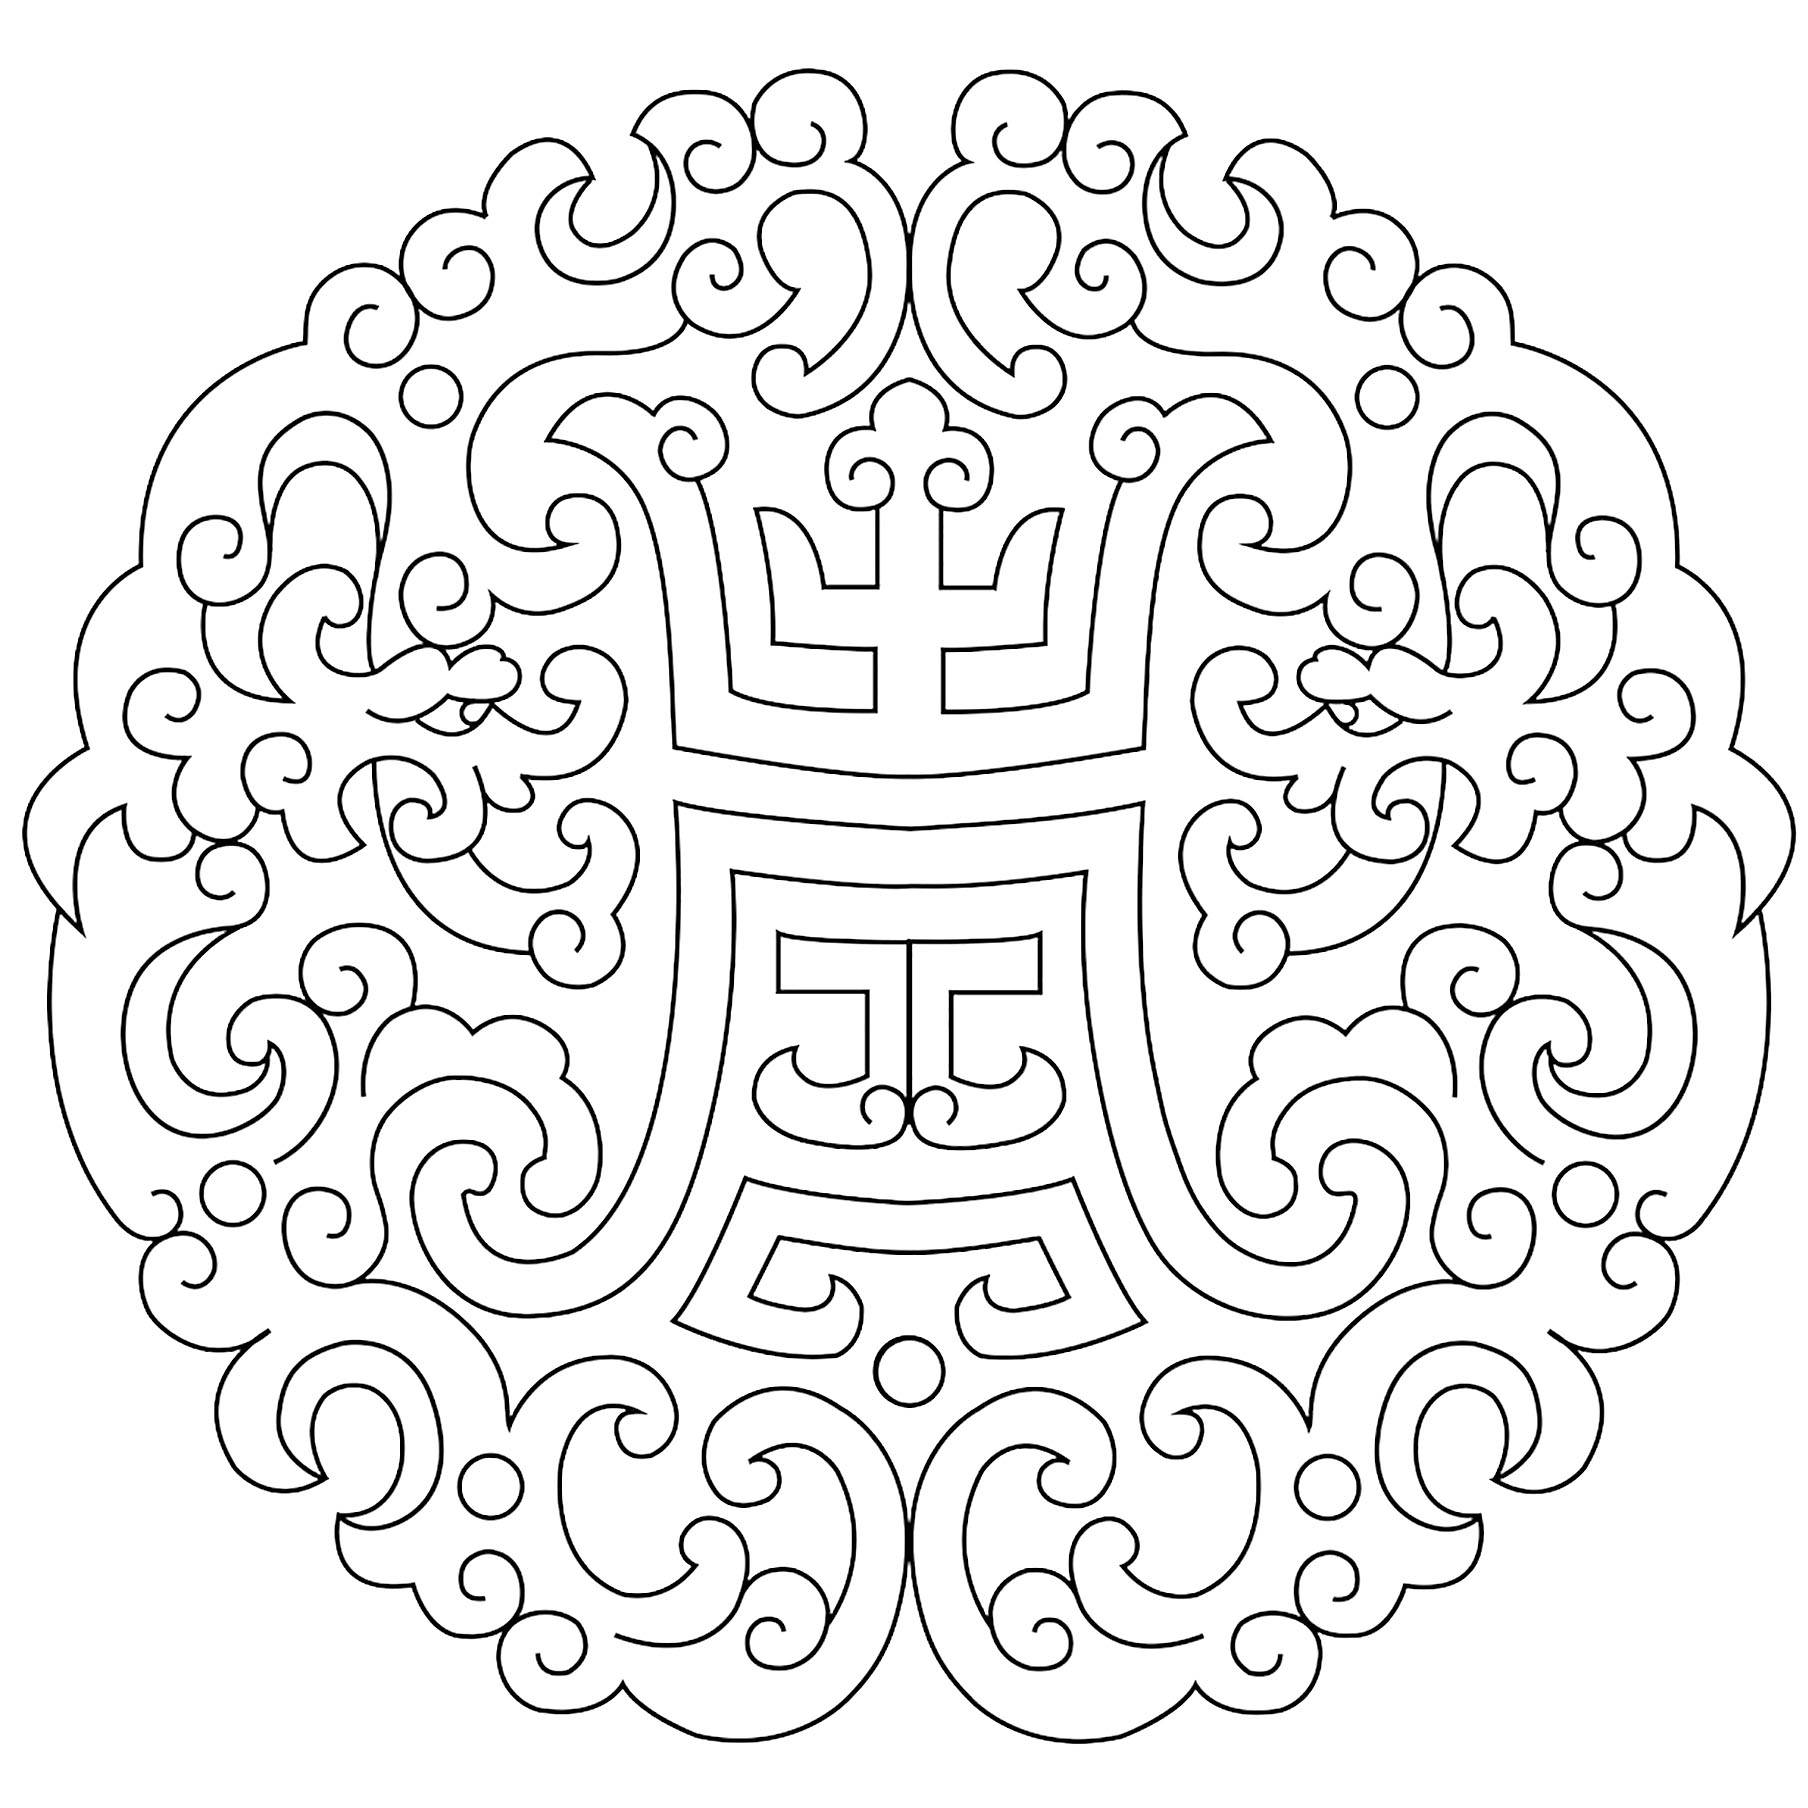 Original Mandala inspired by traditional patterns